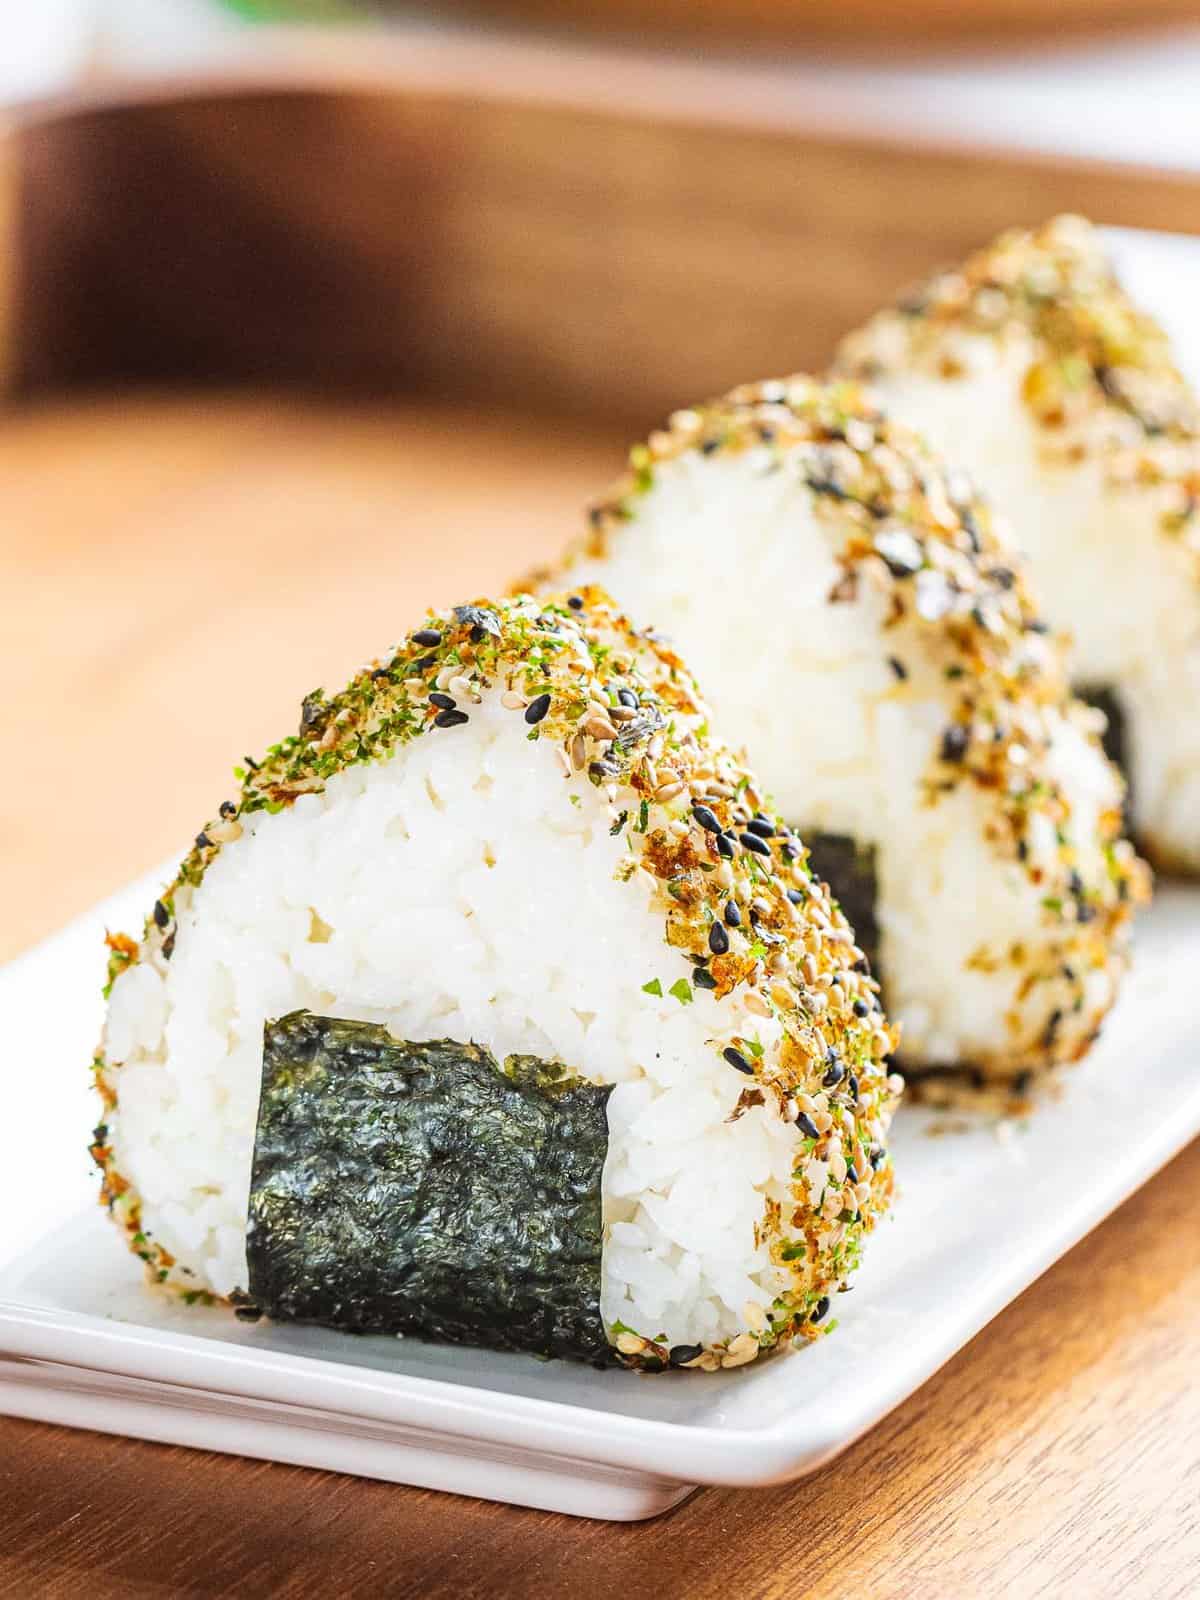 Easy onigiri or Japanese rice balls seasoned with furikake and wrapped with nori seaweed.